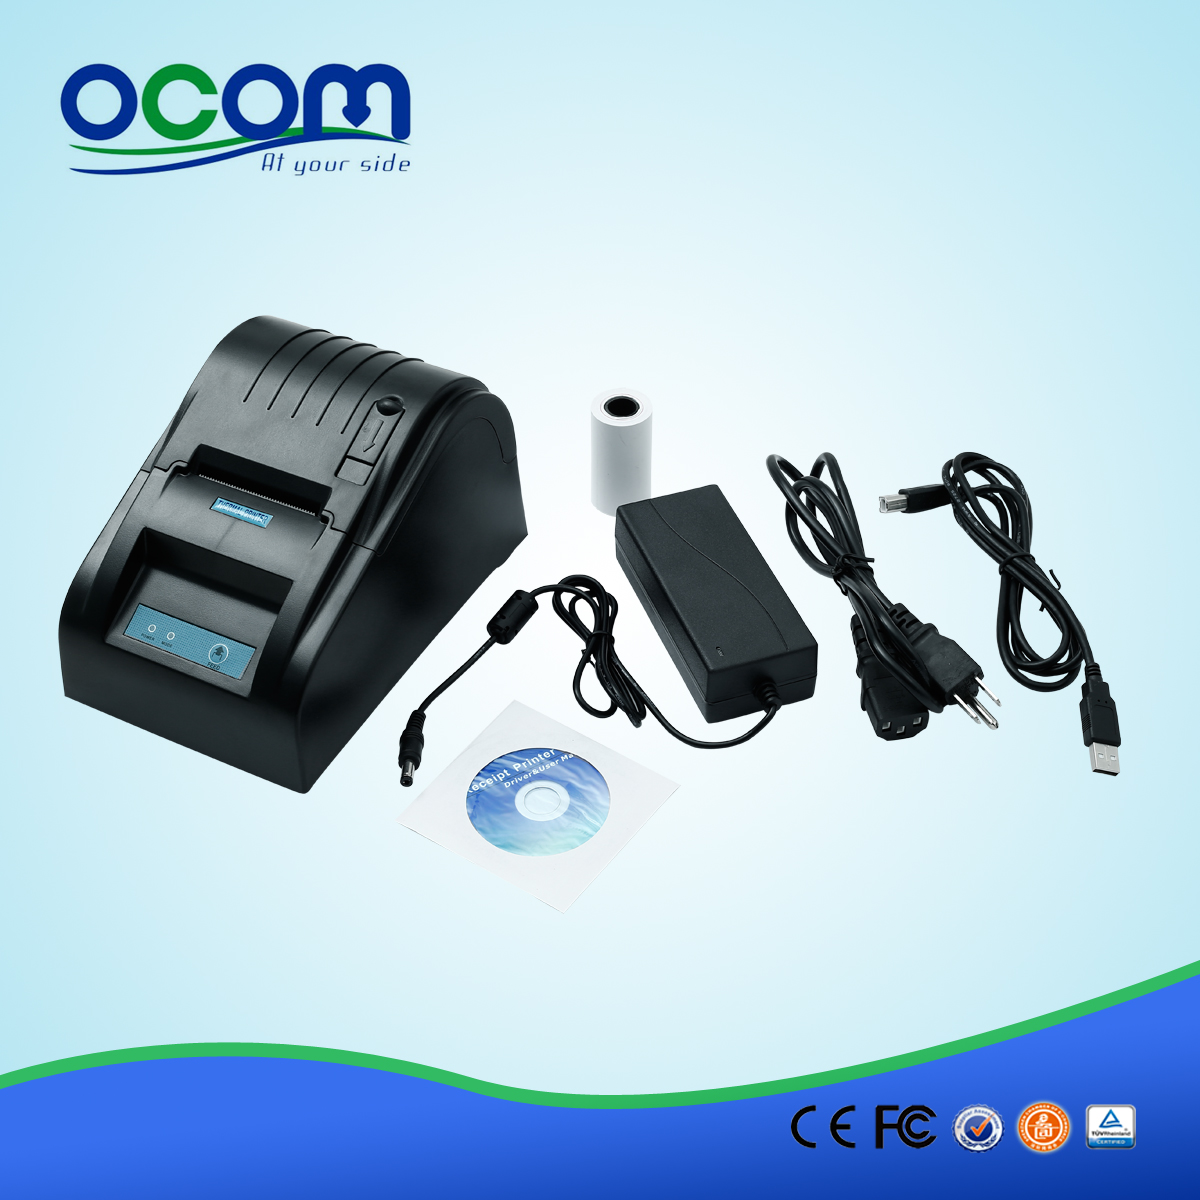 OCPP-585 58 millimetri USB Thermal Receipt Printer Con Driver